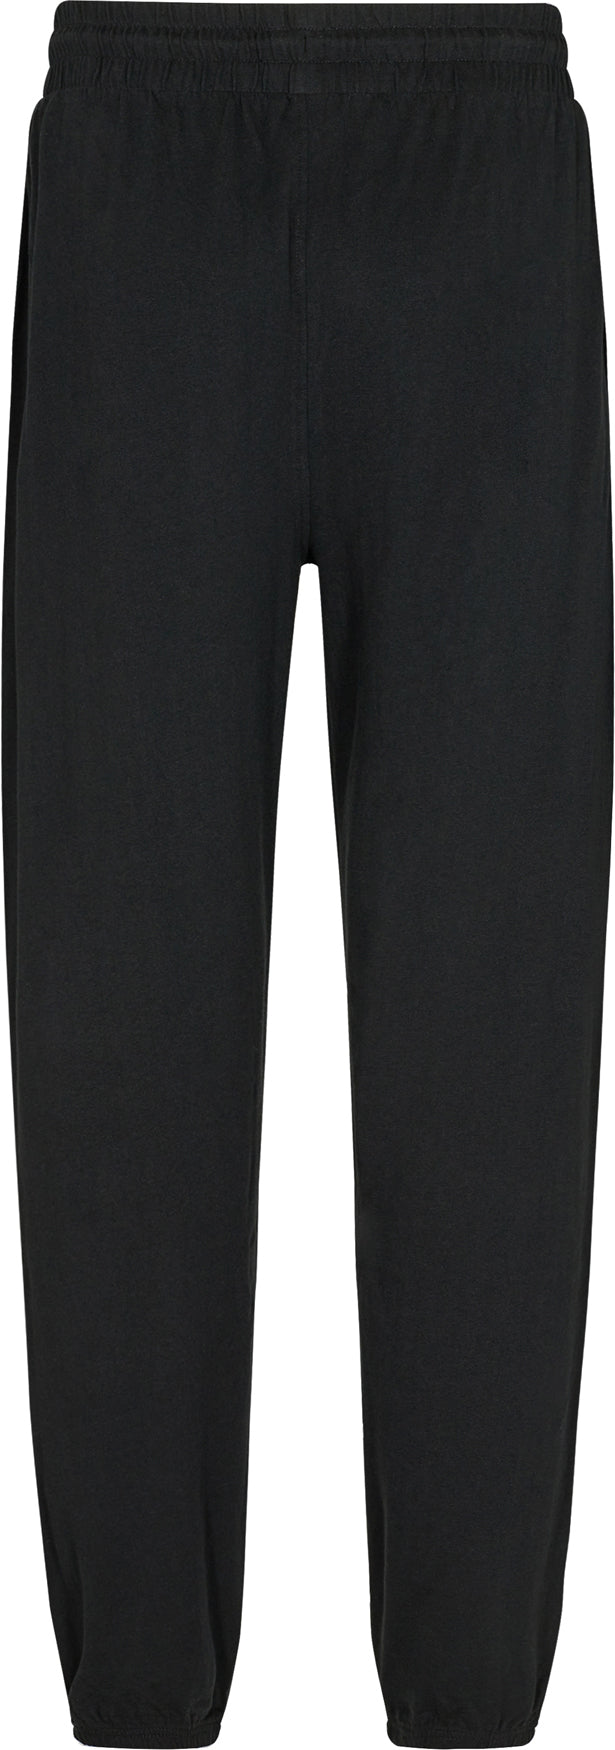 Men's Loungewear Set Long Sleeve | Pant